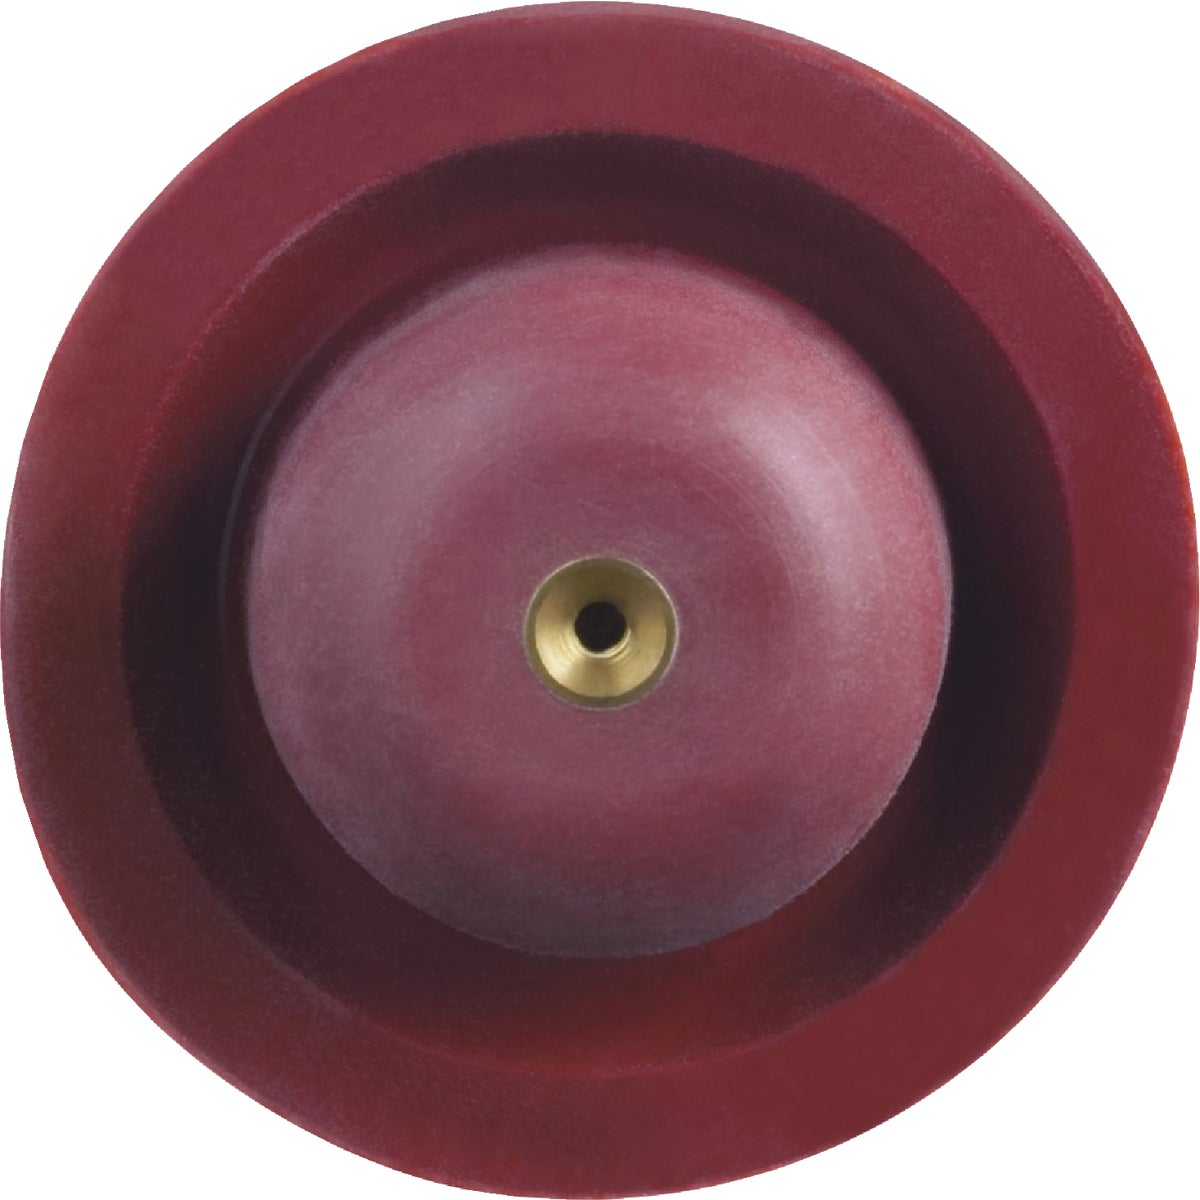 Item 450826, Flush ball for Champlain (model No. 3390), Palarre (model No.